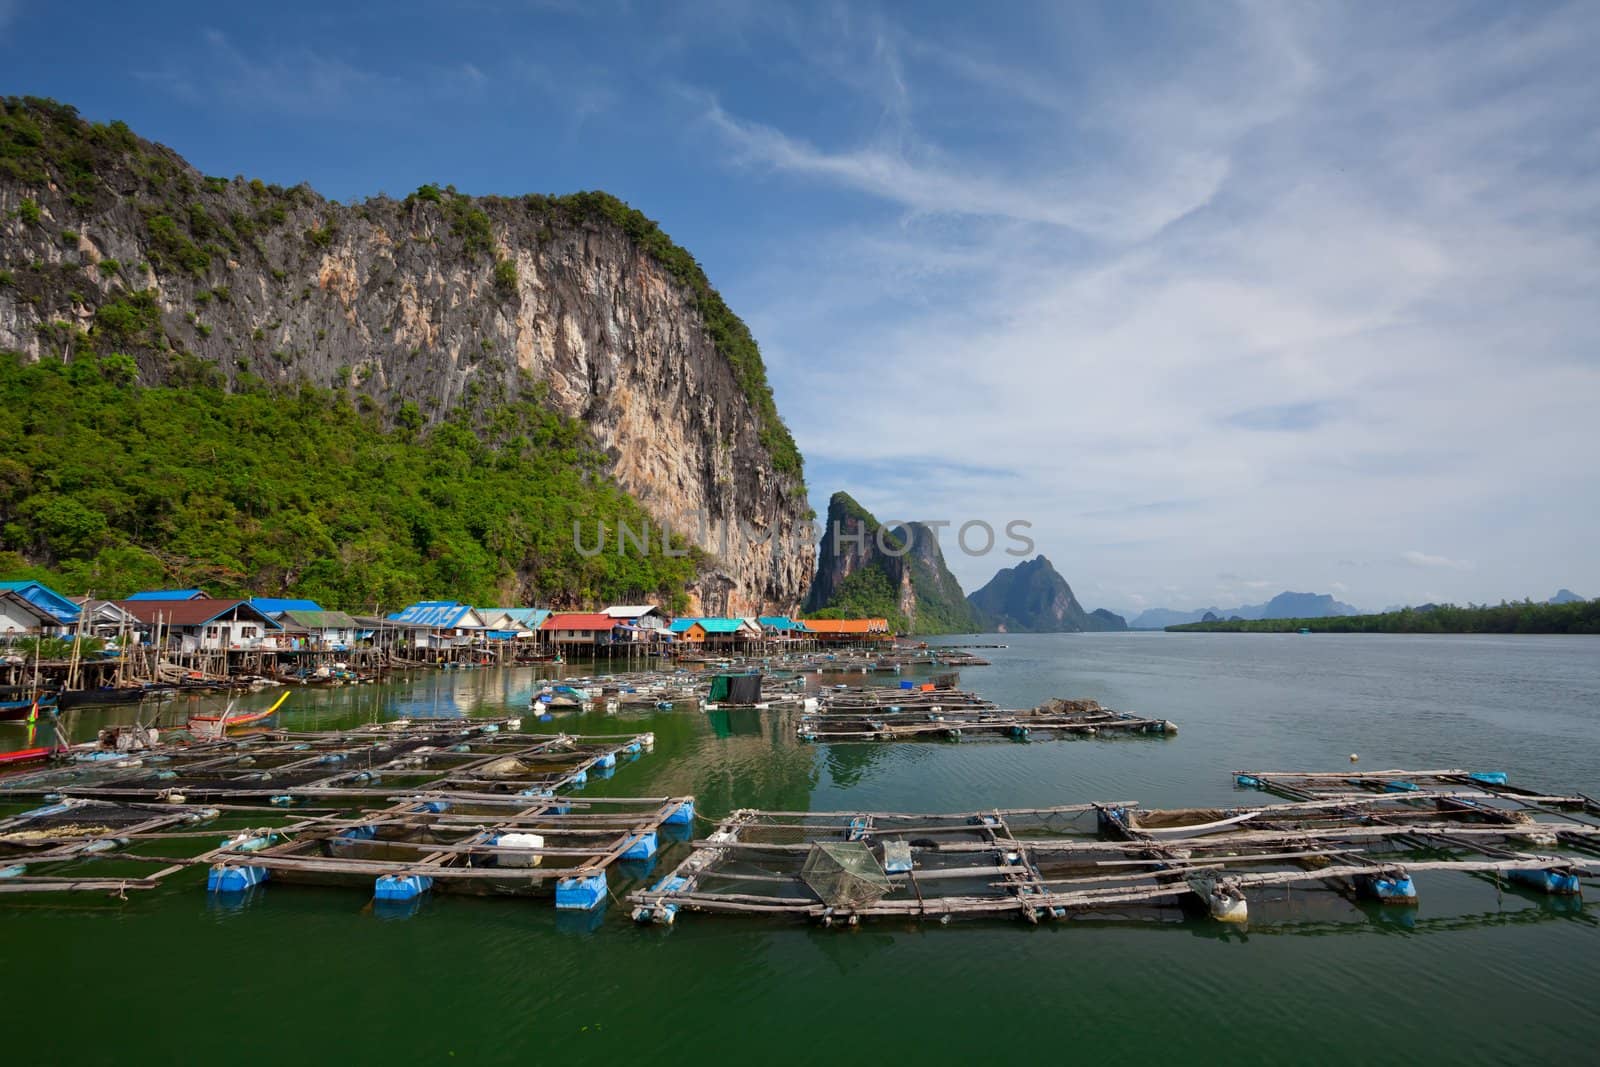 Fishermen's Village, on the Coast of Thailand